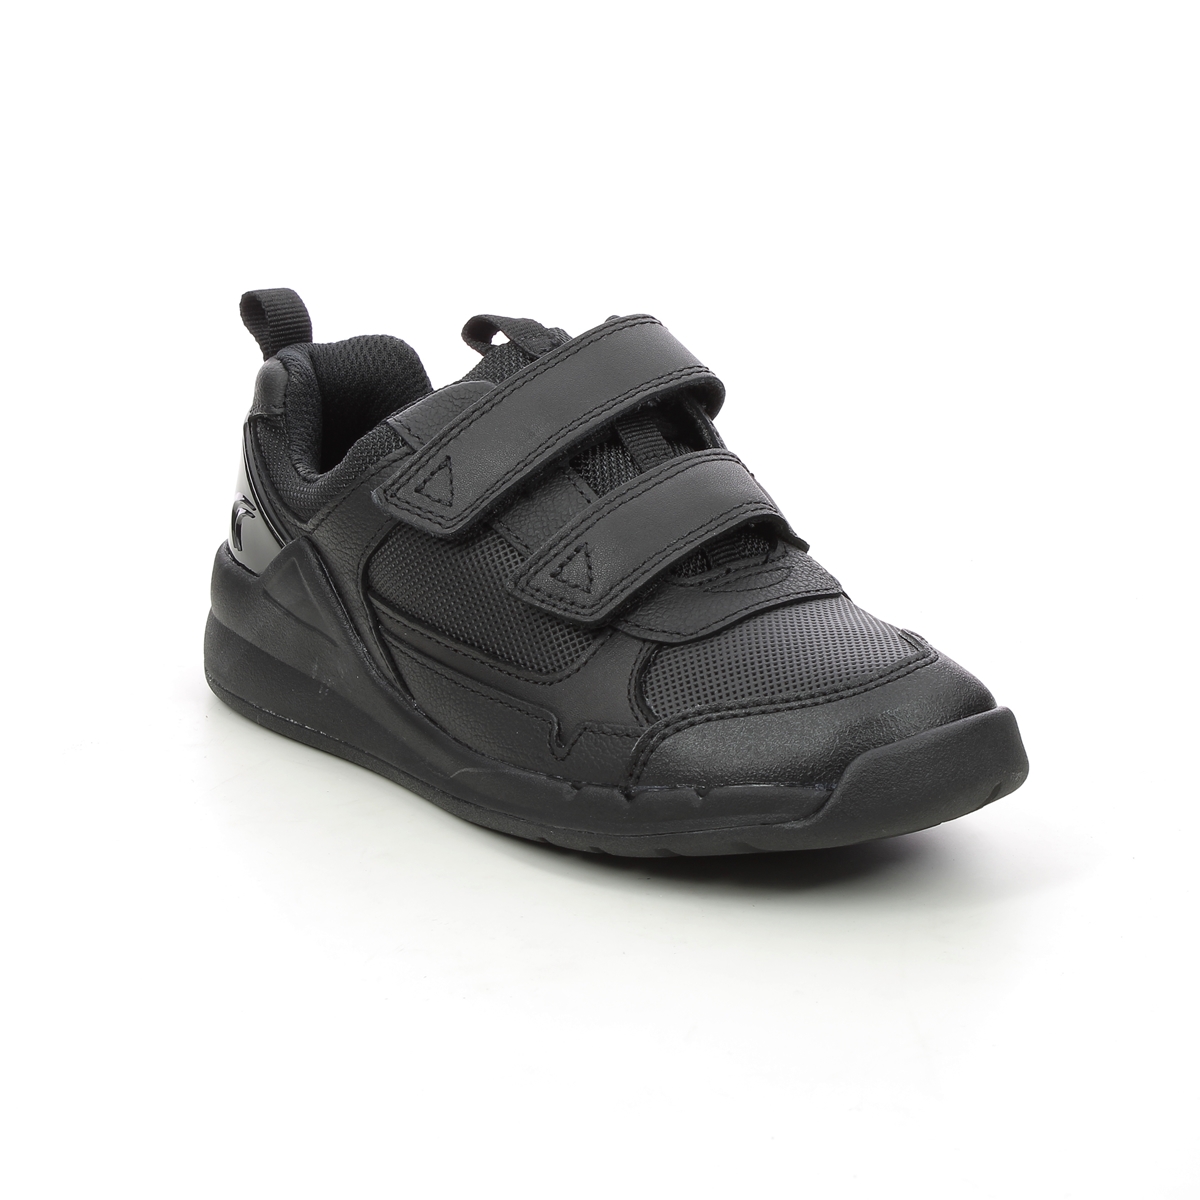 Clarks Orbit Sprint K Black Leather Kids Boys Shoes 534786F In Size 11 In Plain Black Leather F Width Fitting Regular Fit For kids